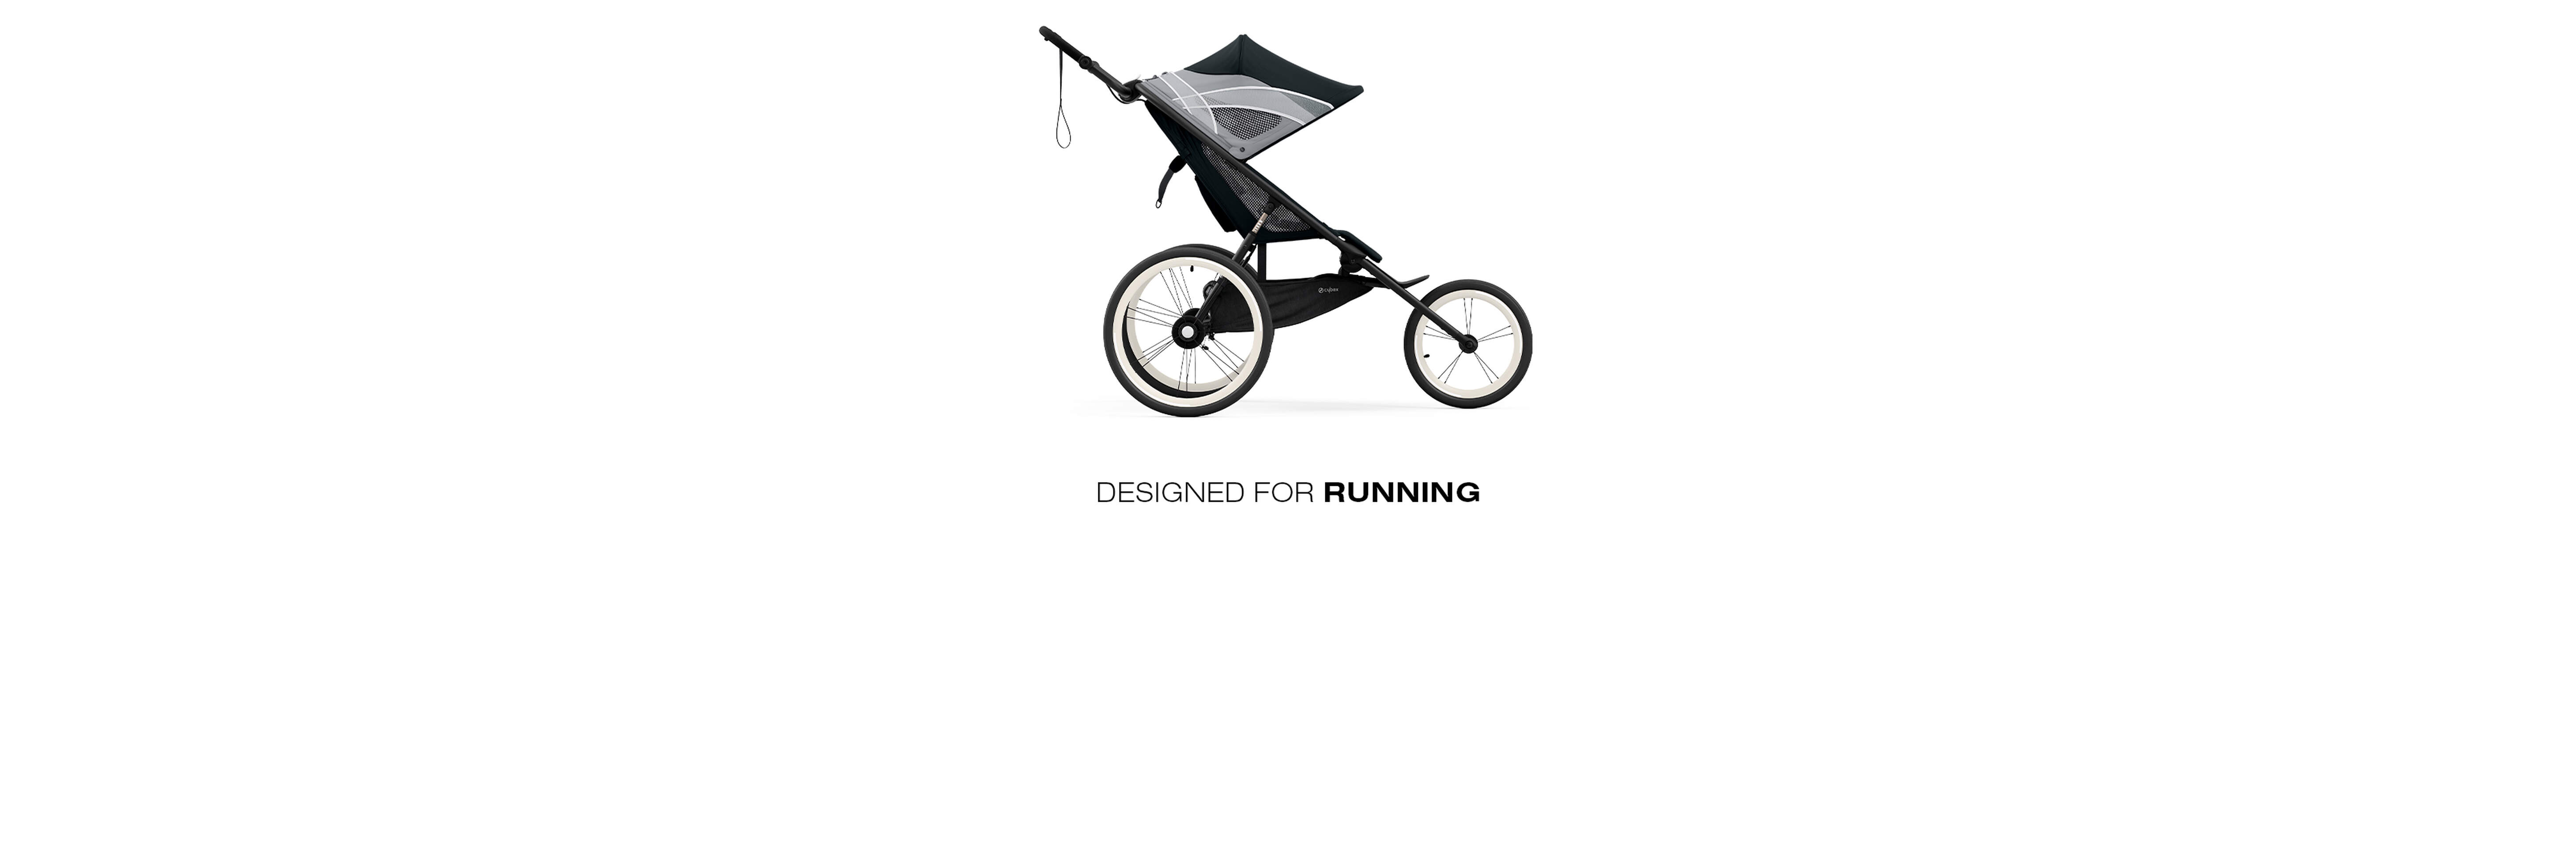 Produktbild på Cybex Gold Sport Avi barnvagn